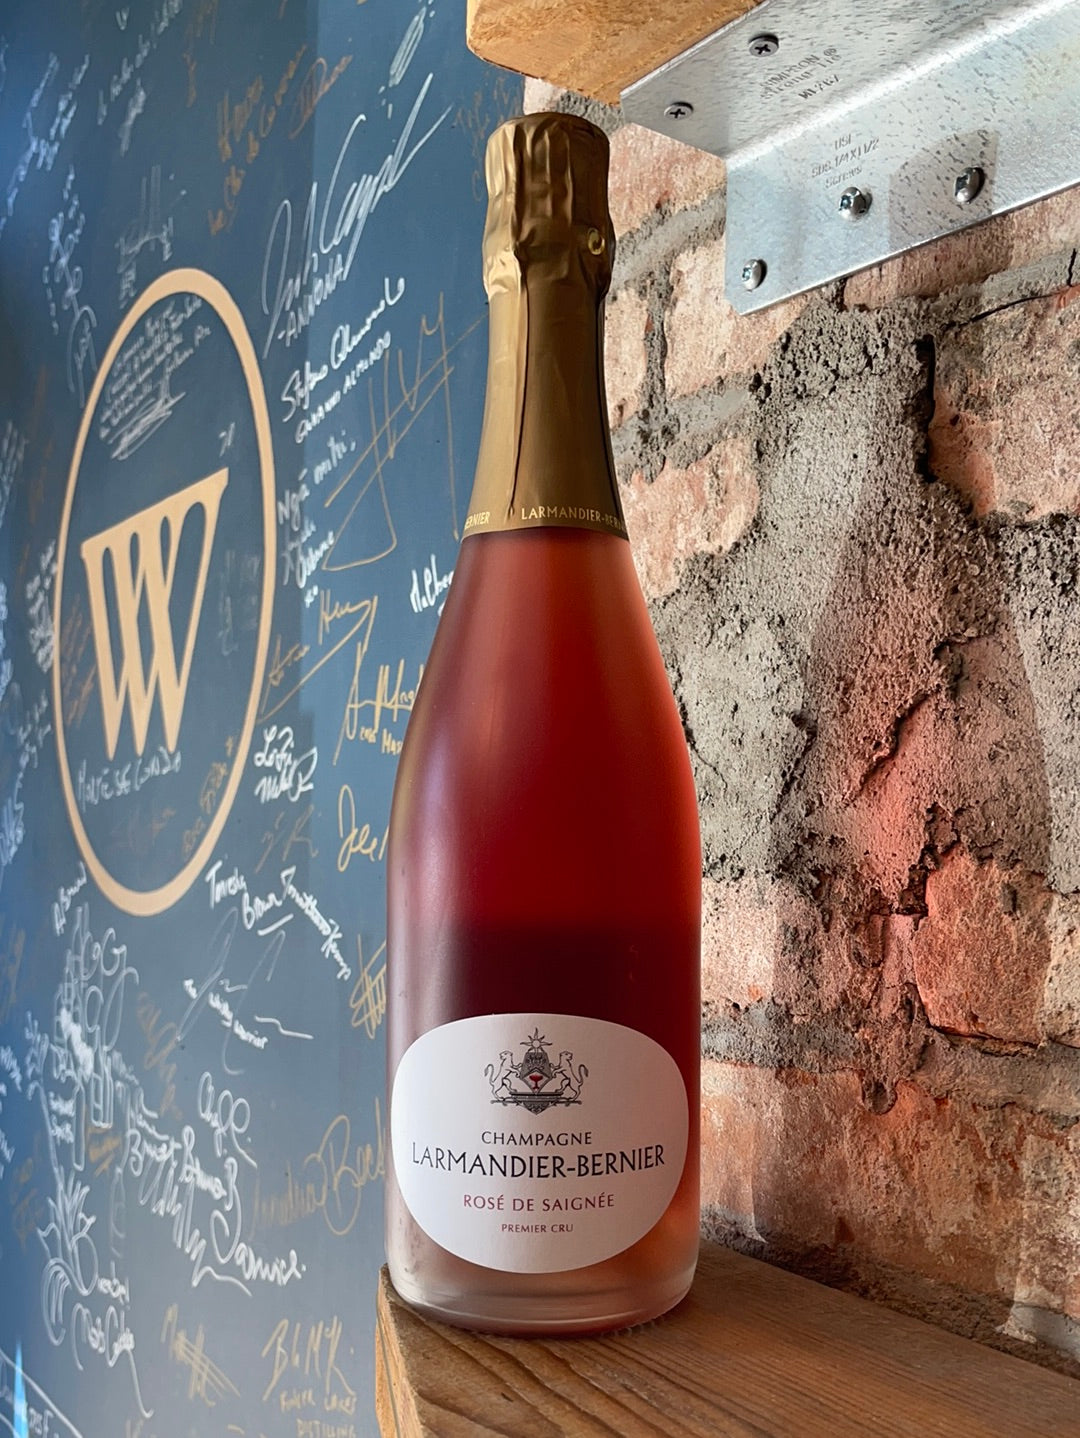 Larmandier-Bernier Champagne "Rose de Saignee" Extra Brut NV (2018)